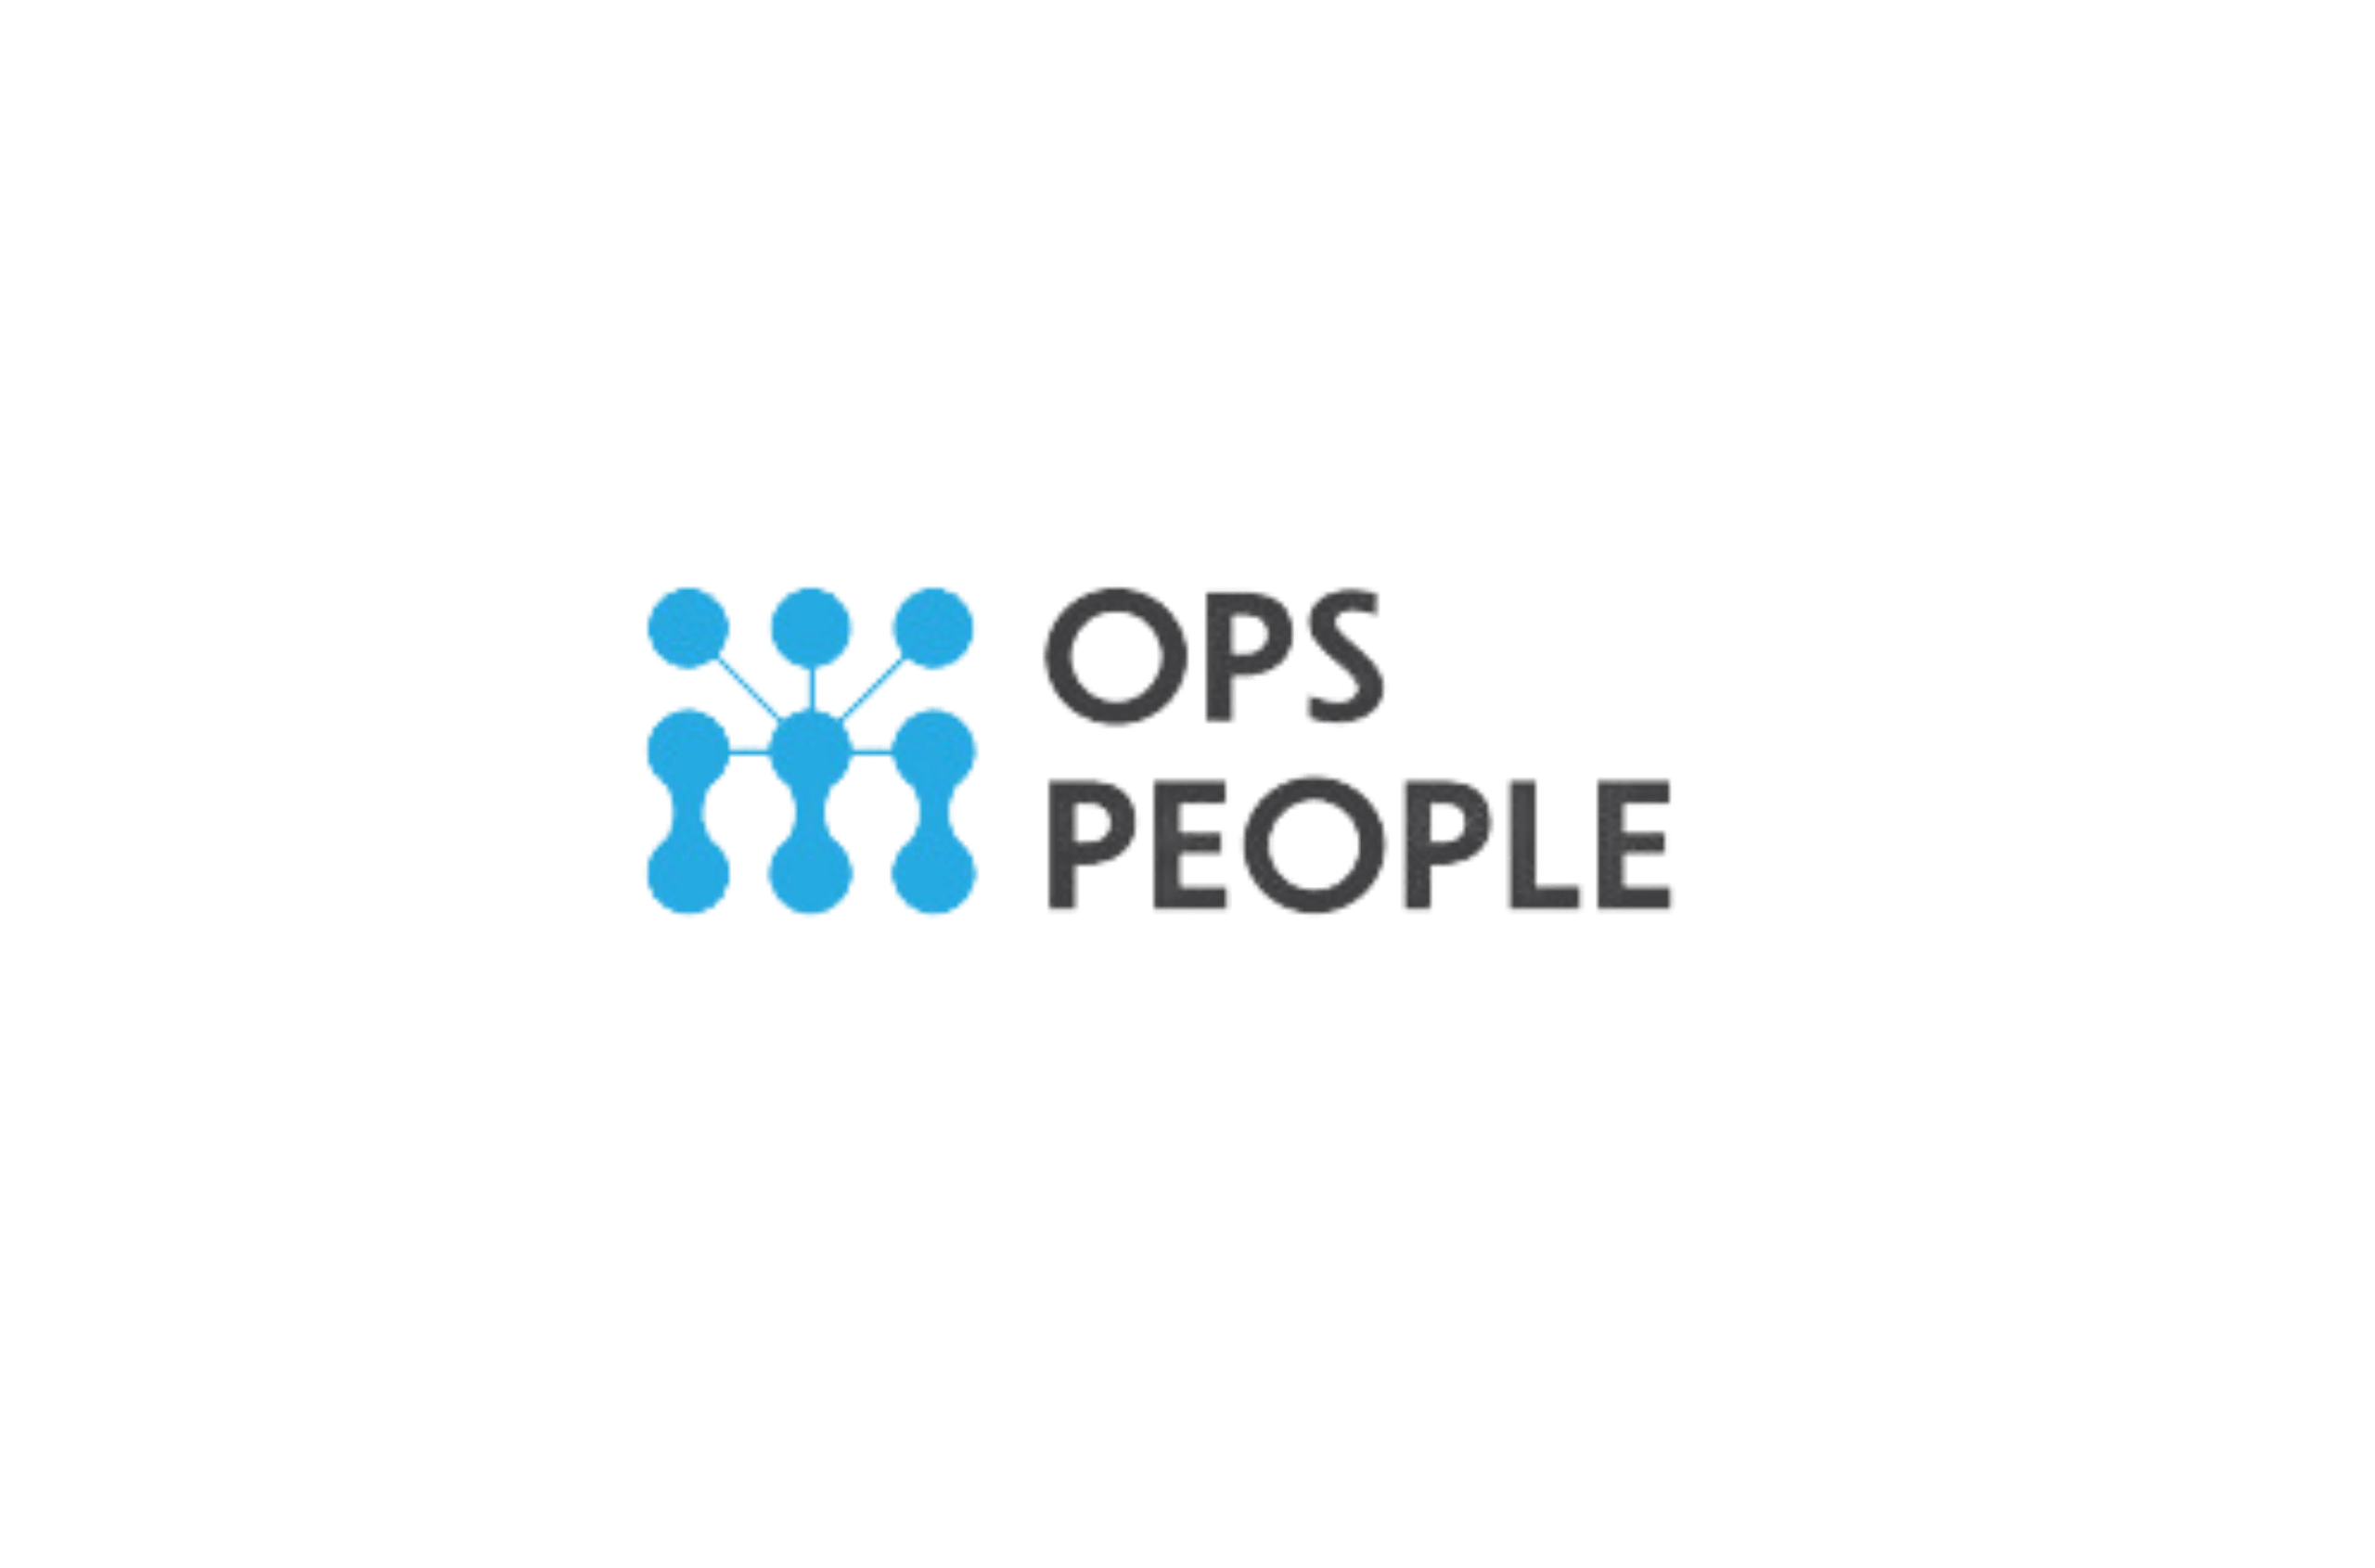 ops people